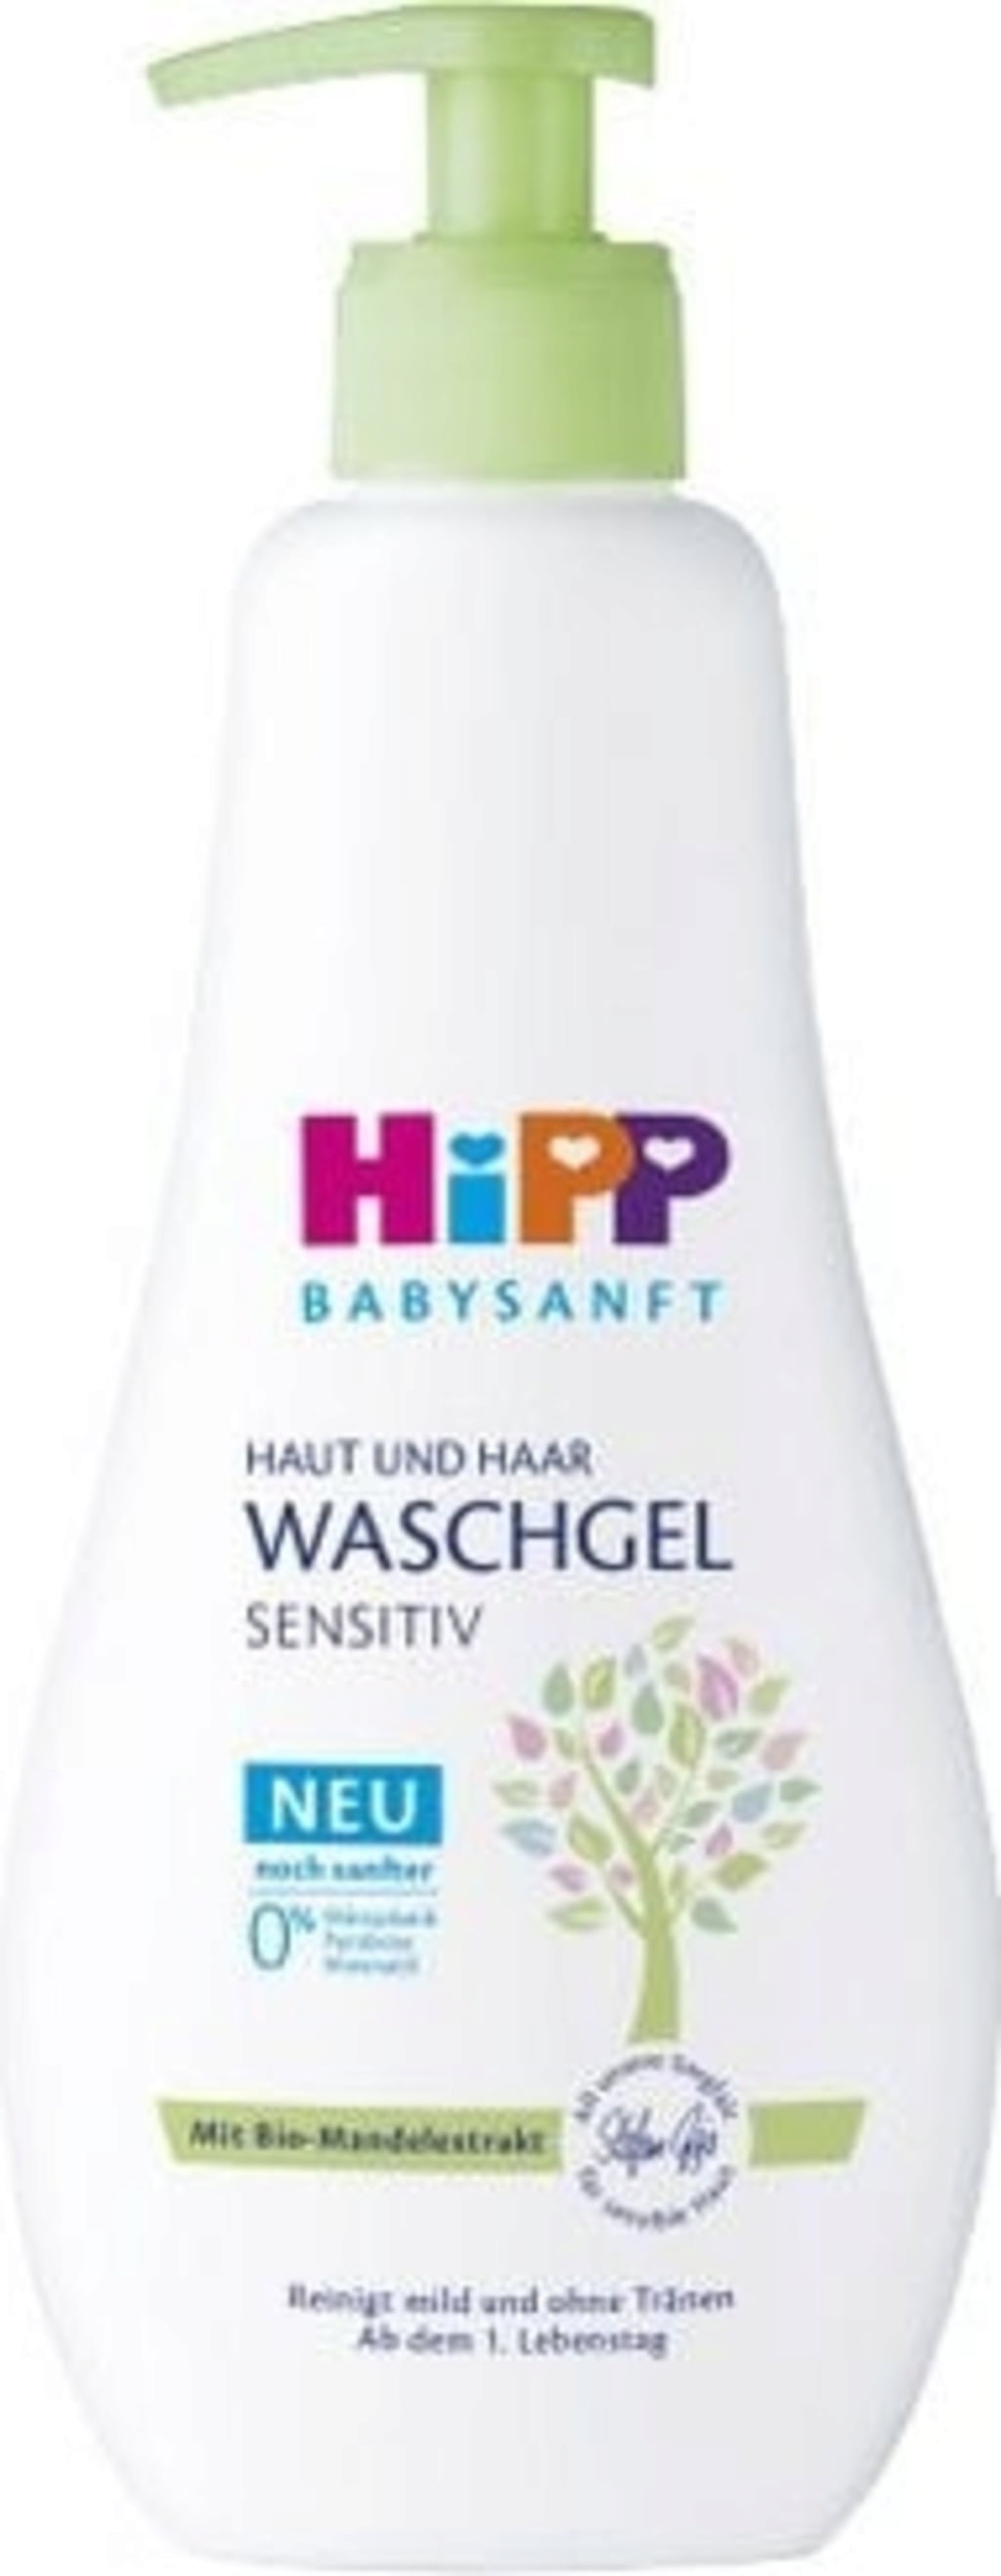 HIPP Baby Soft Sensitive Wash Gel for Skin and Hair, 400 ml - oh feliz